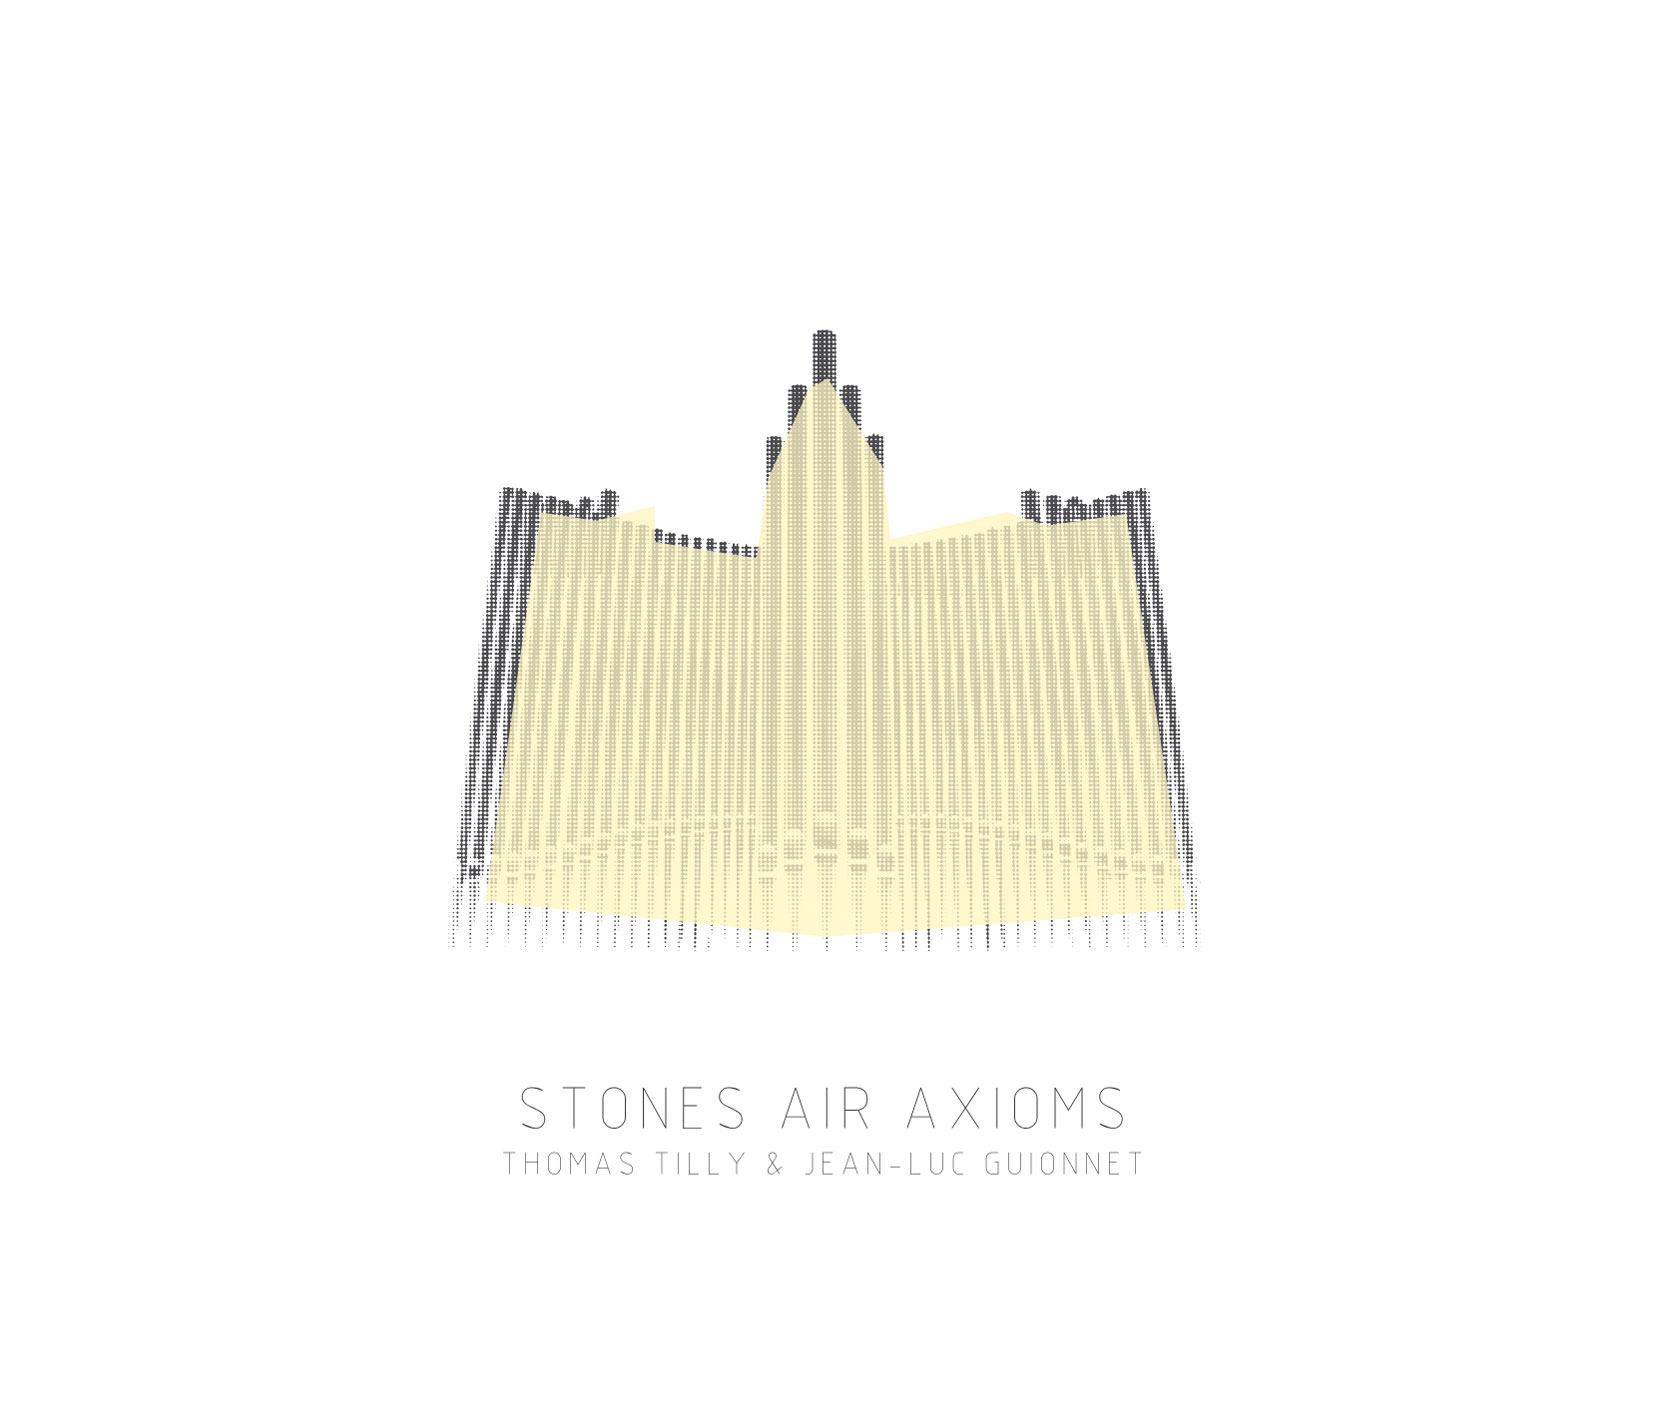 Stones air axioms